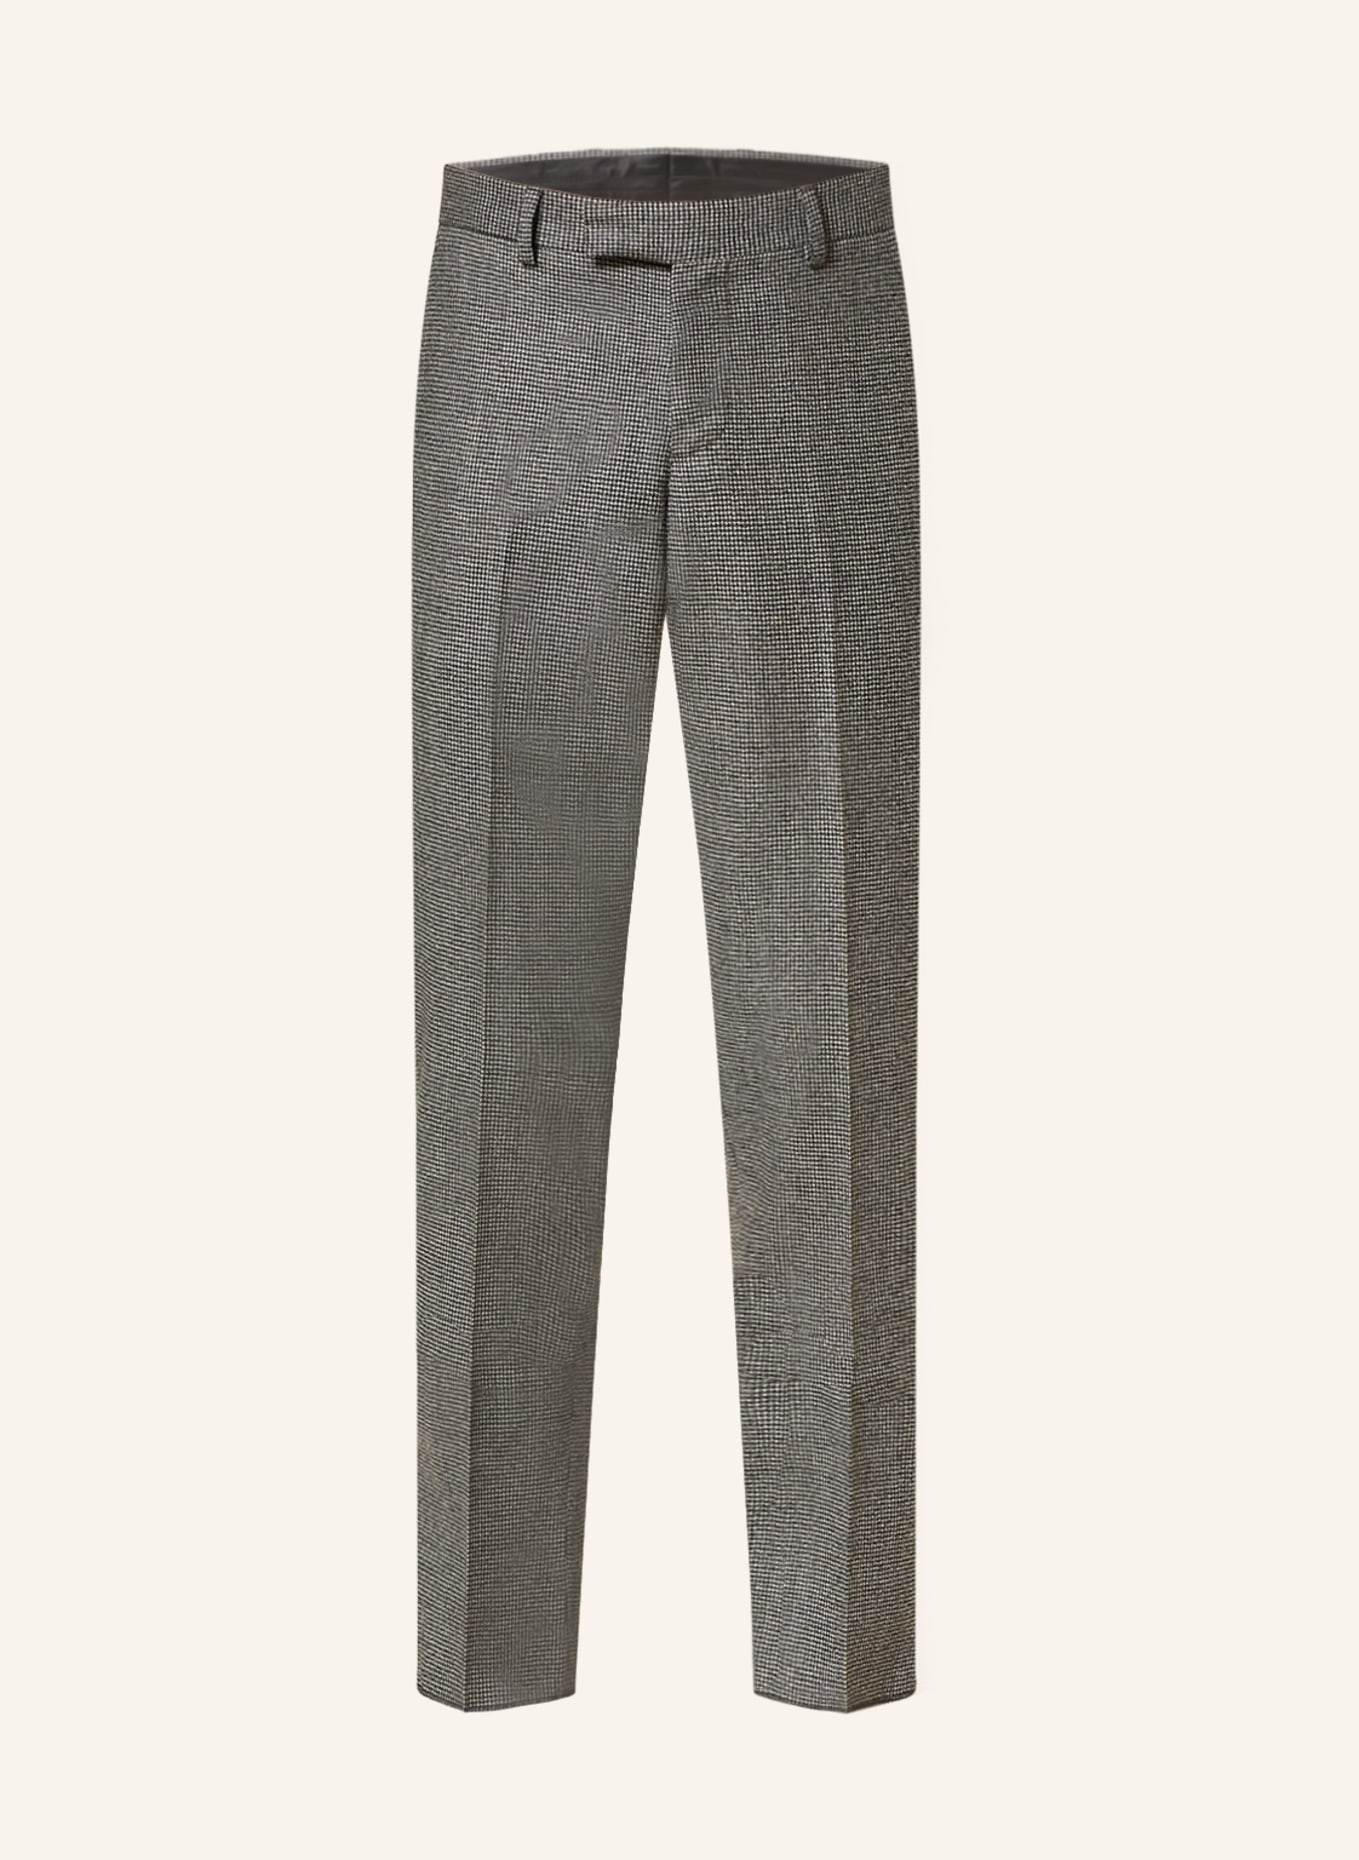 LARDINI Anzughose Slim Fit, Farbe: 920 ANTHRA (Bild 1)